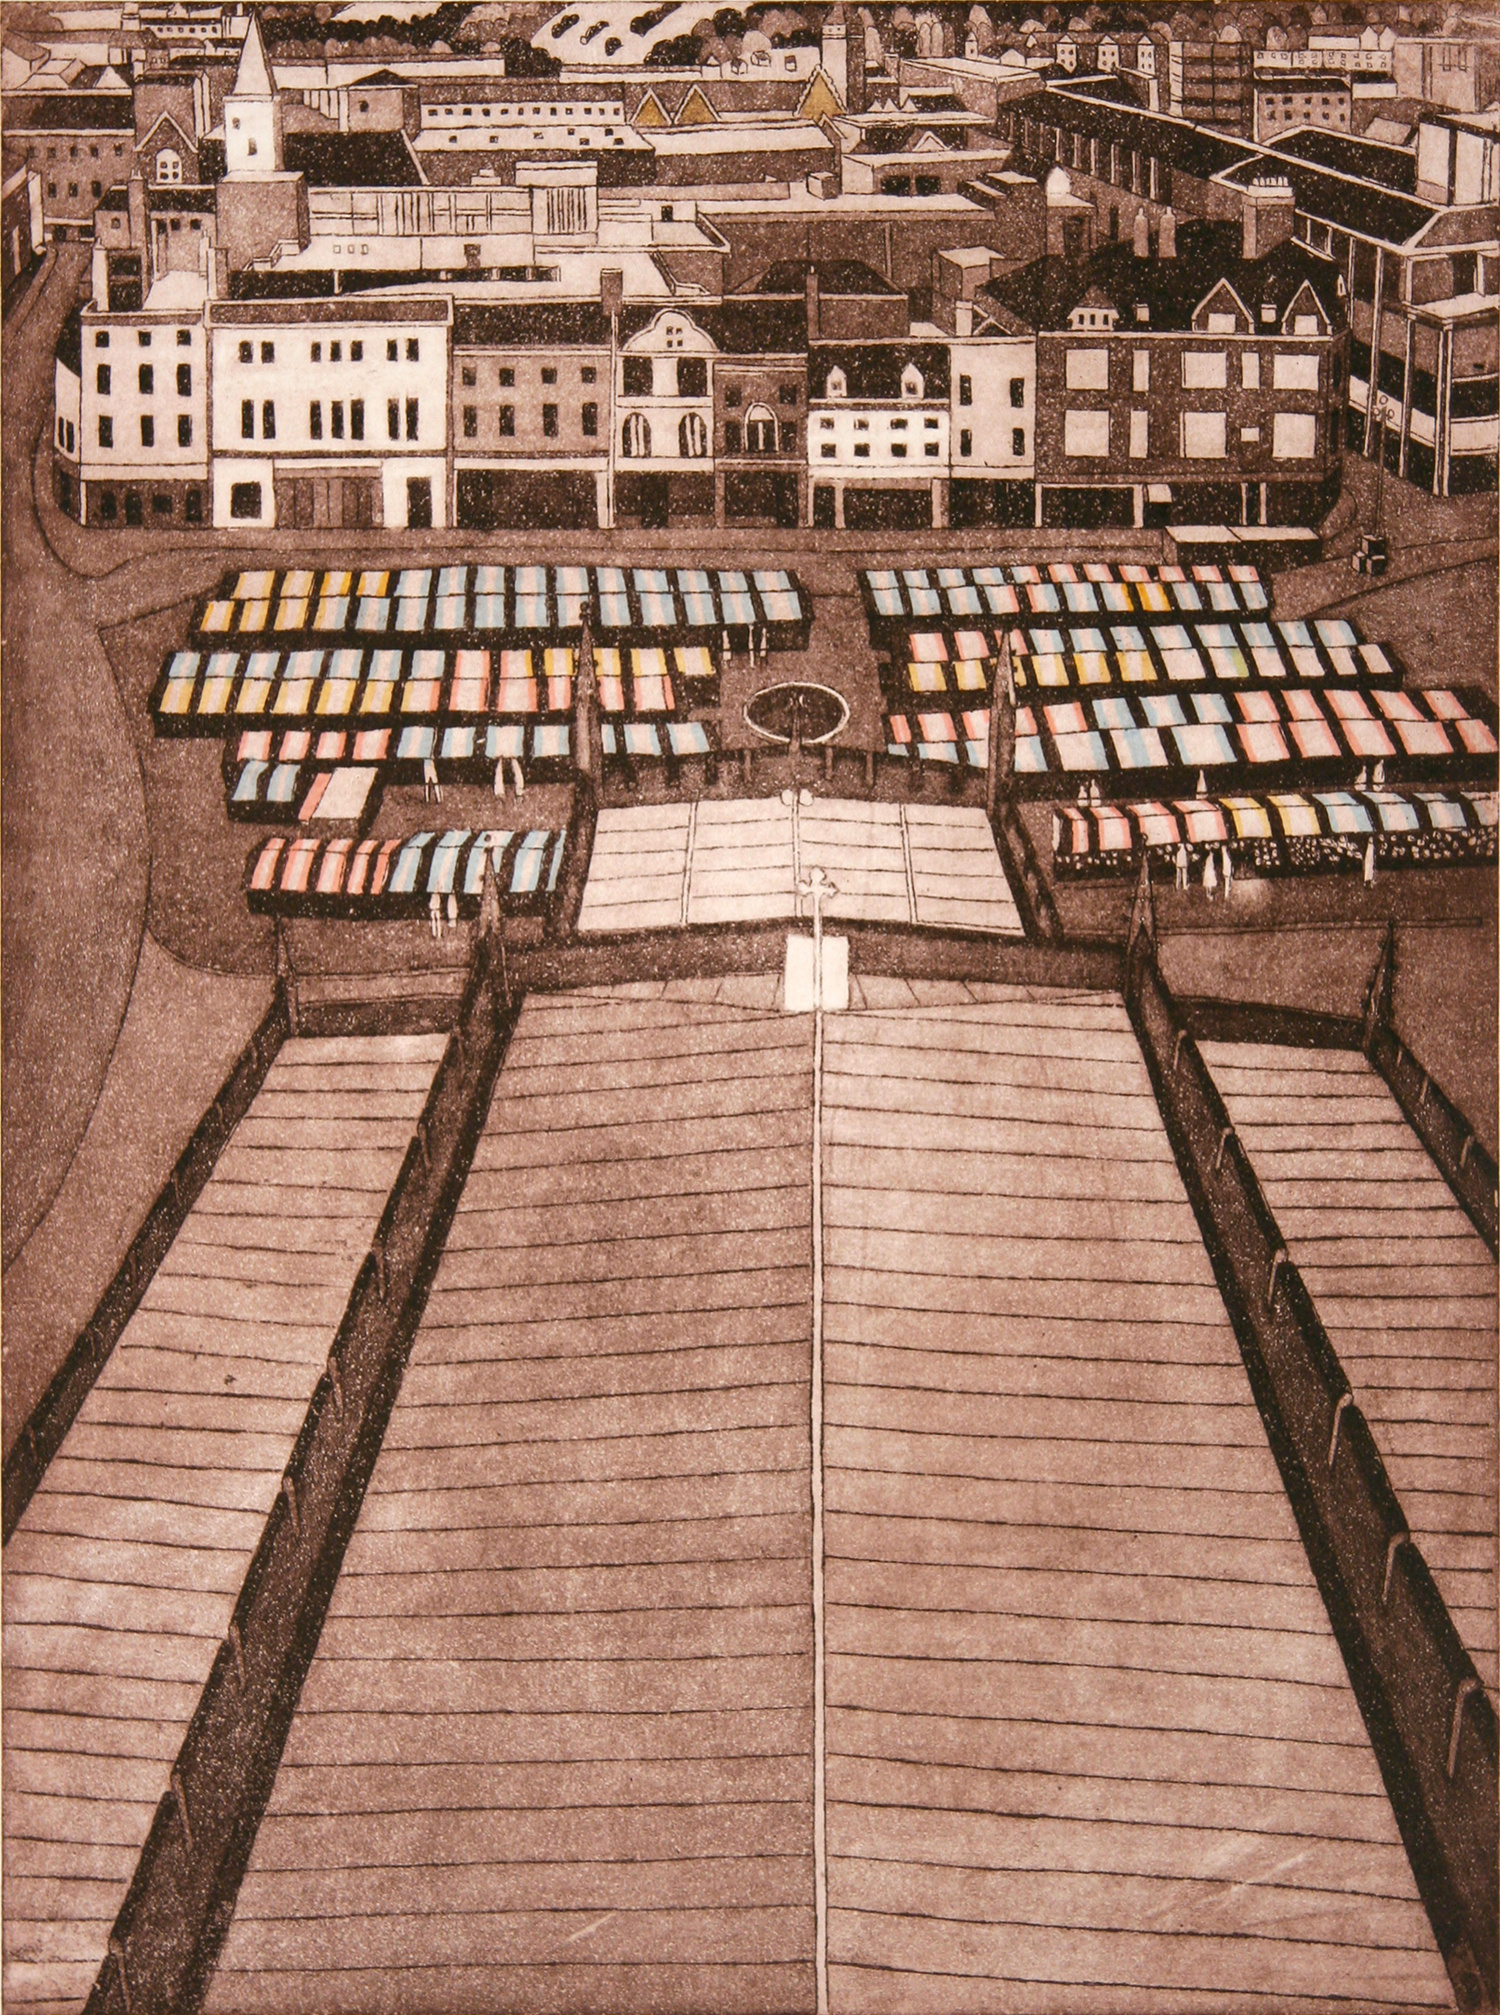 Market Stalls by John Brunsdon